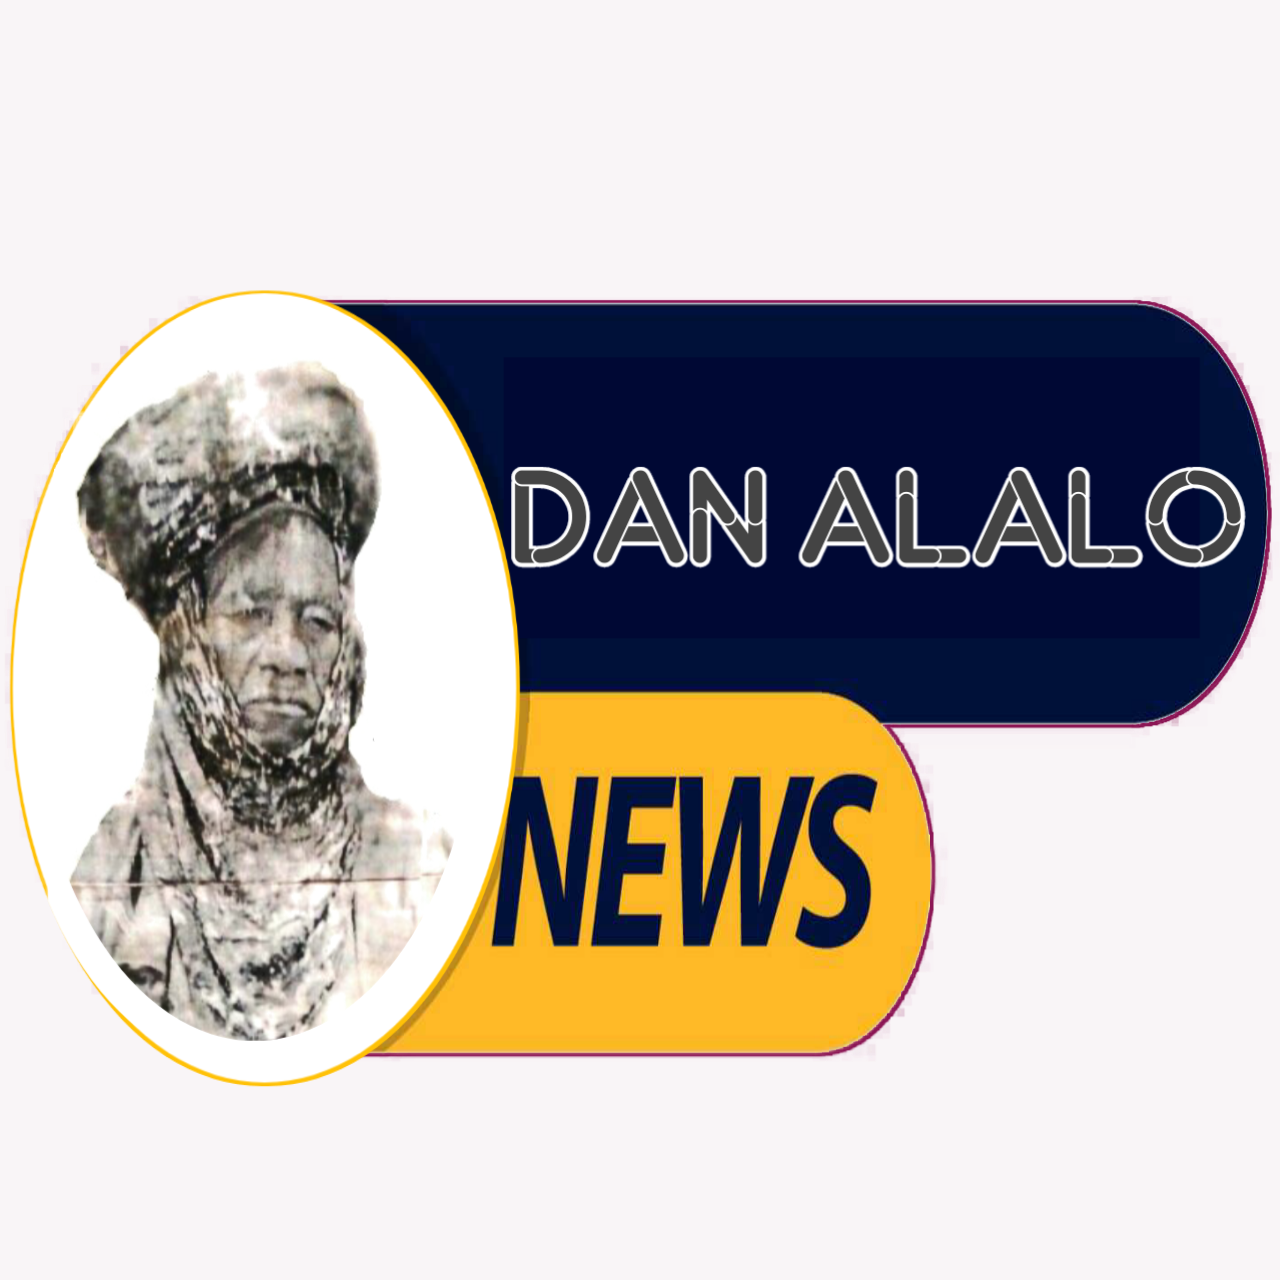 Dan Alalo news